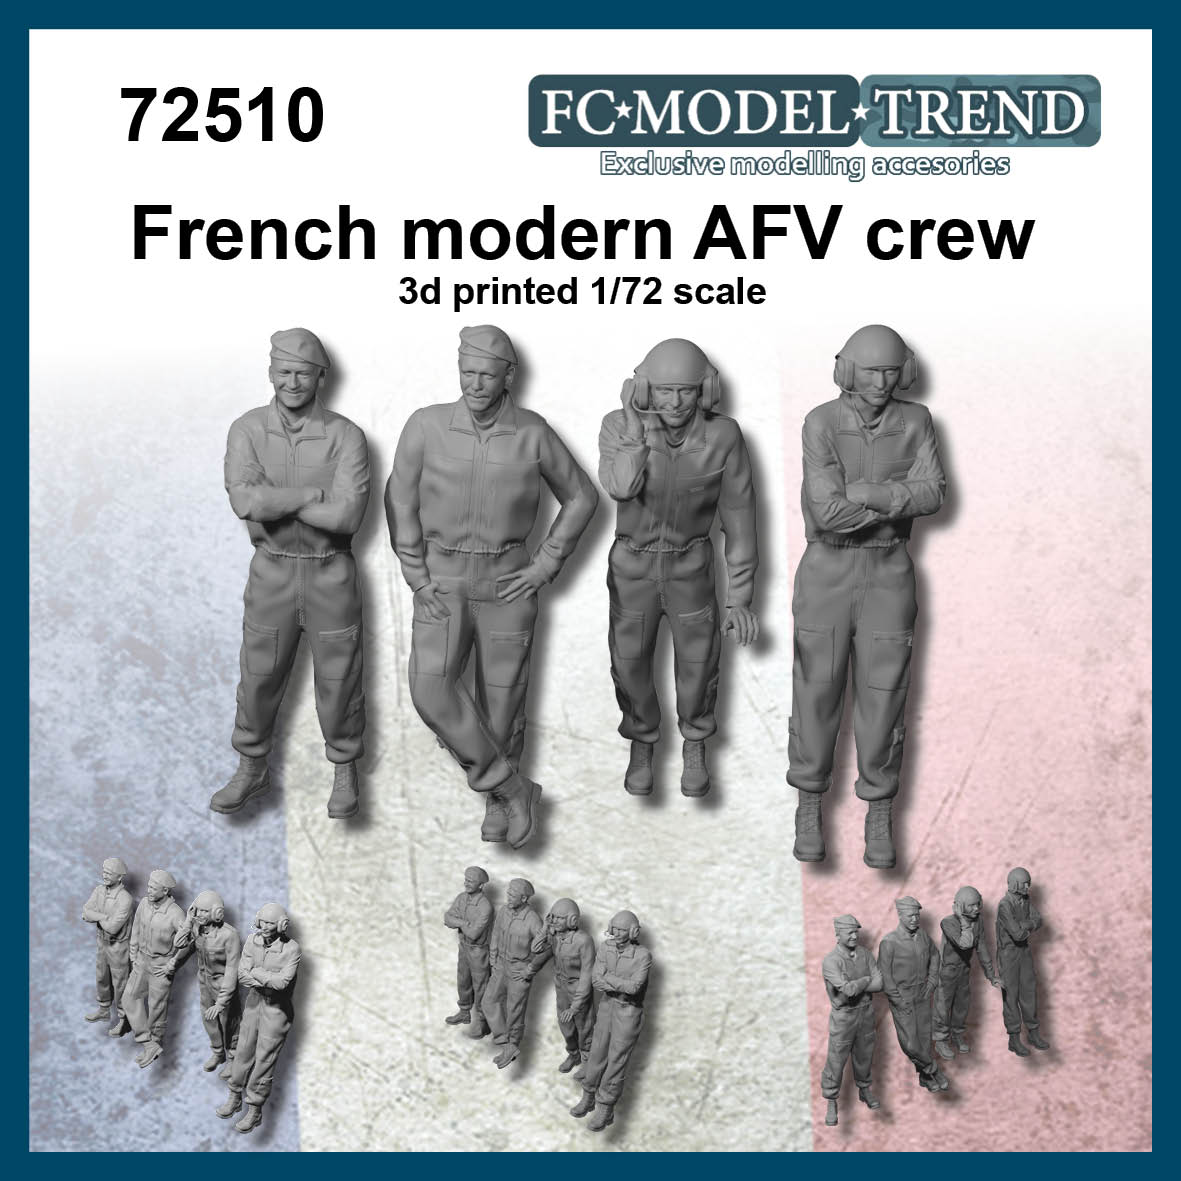 French modern AFV crew